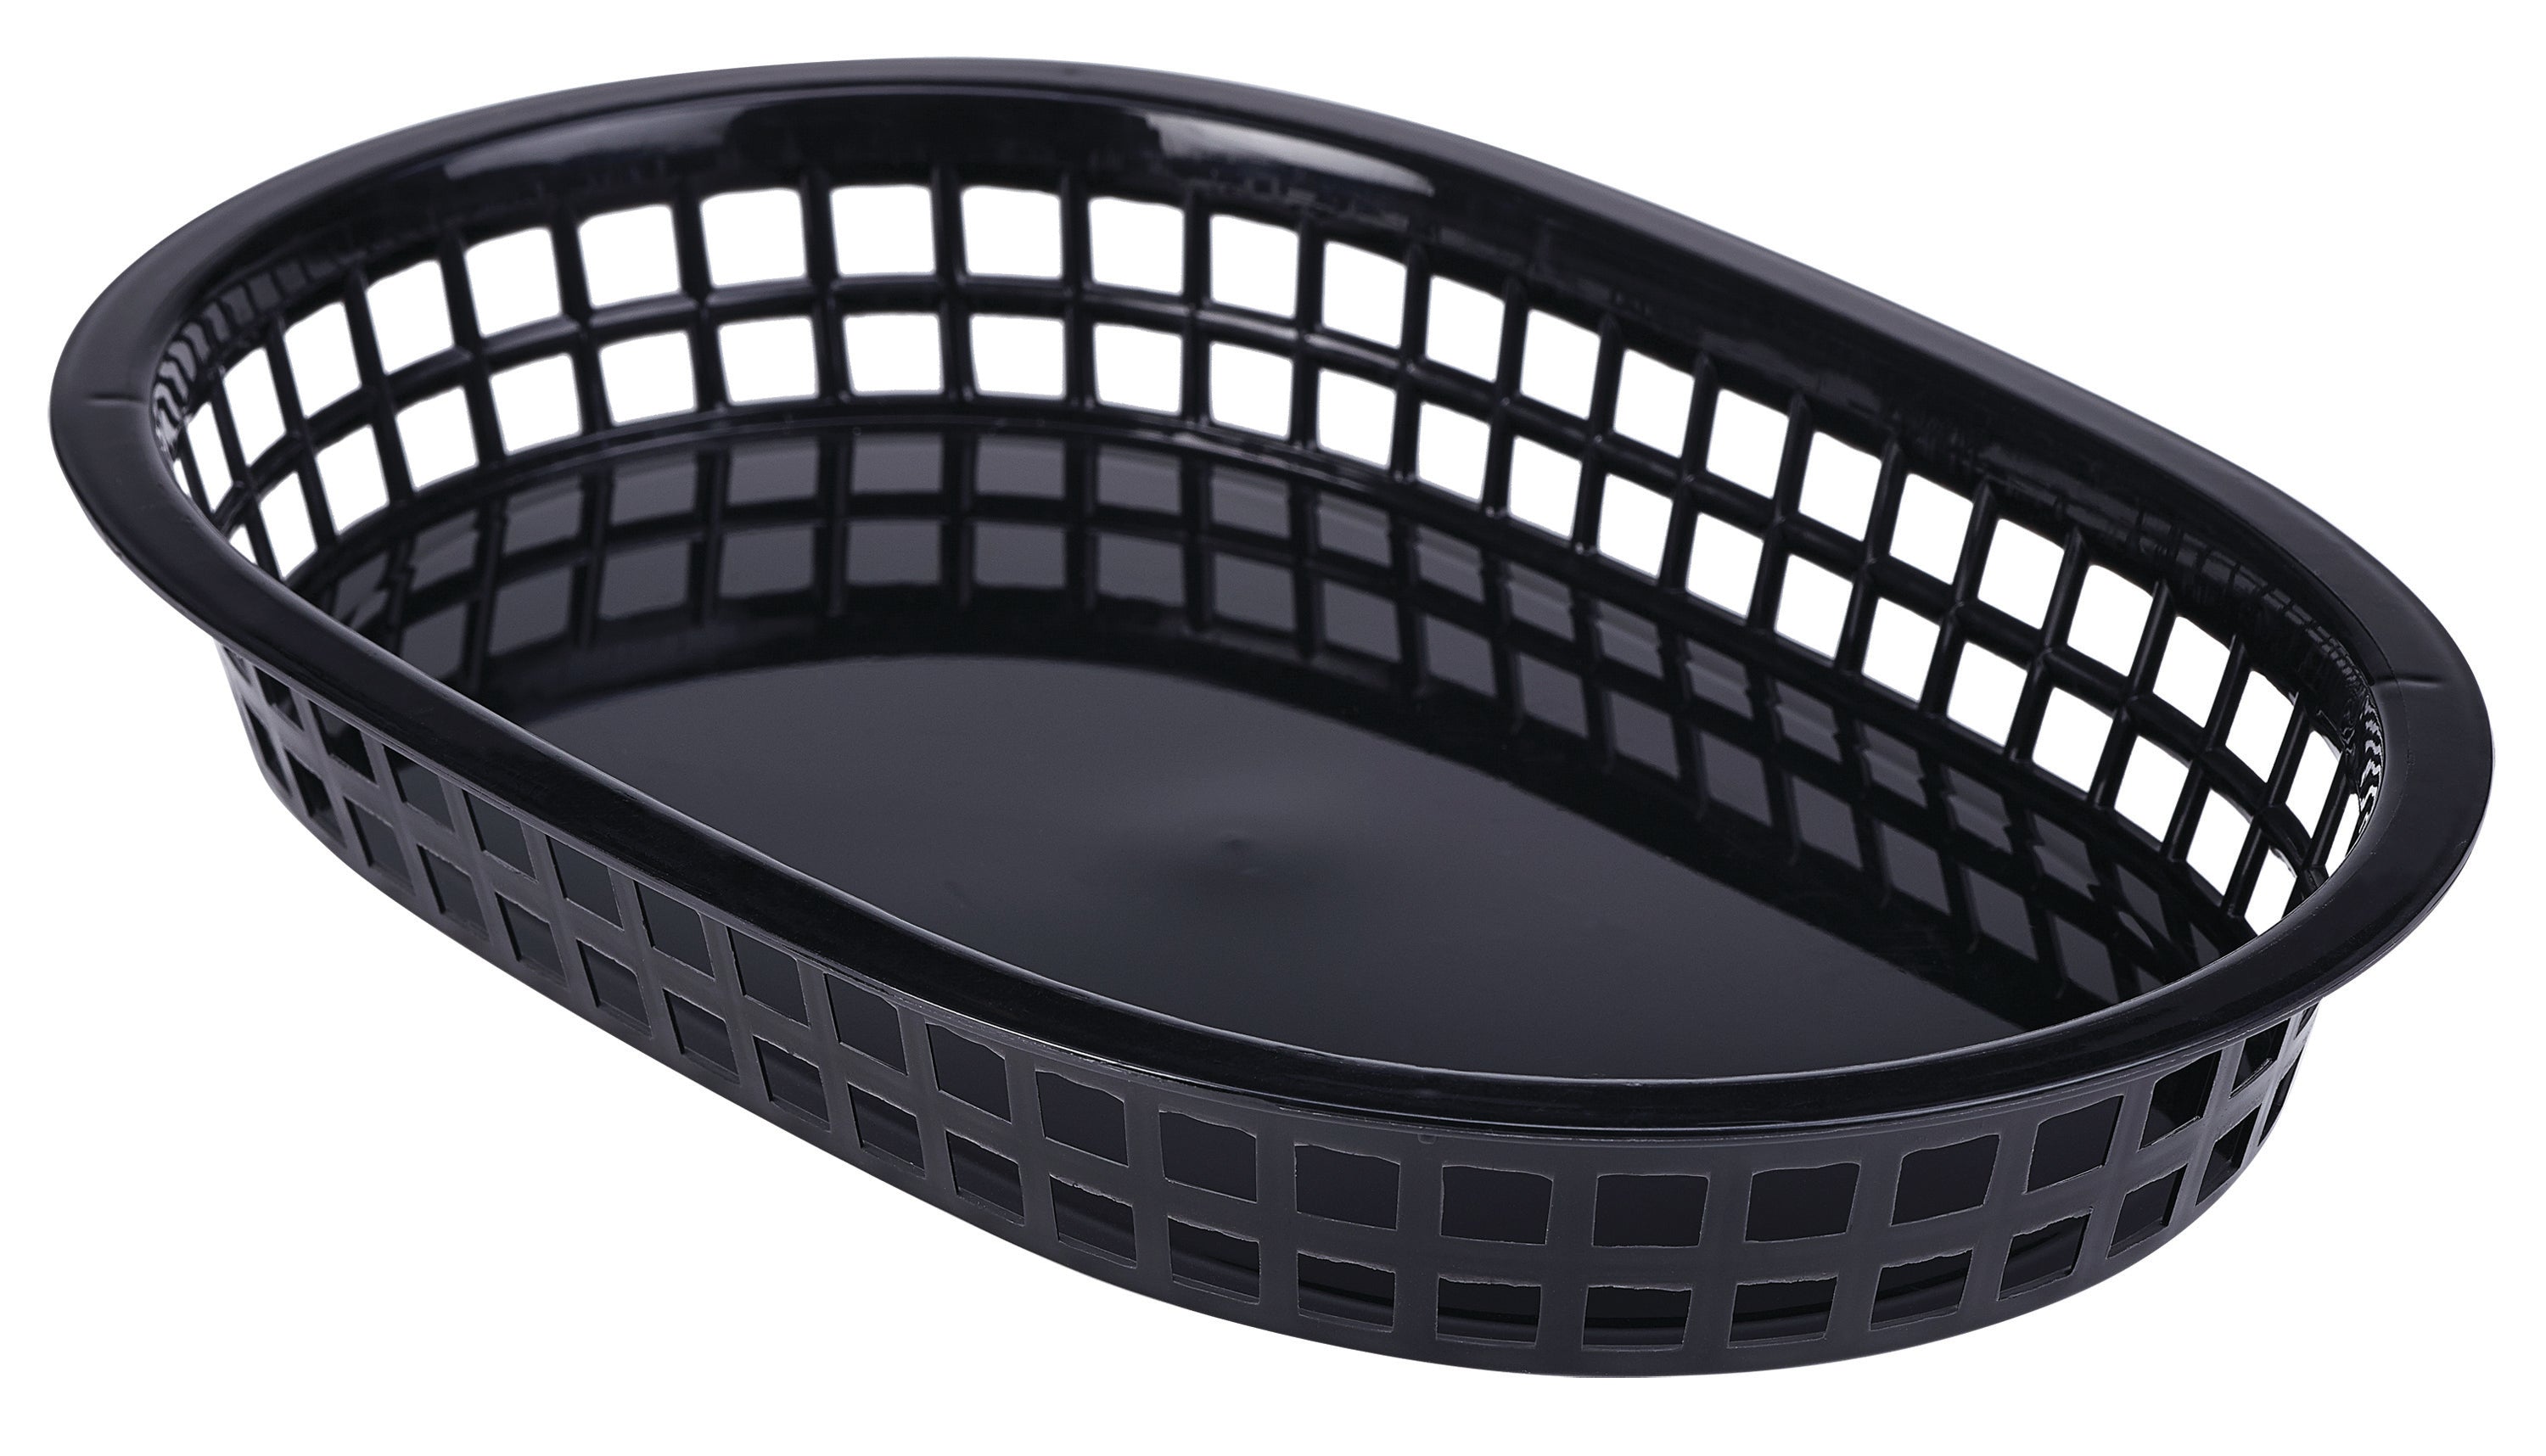 Fast Food Basket Black 27.5 x 17.5cm